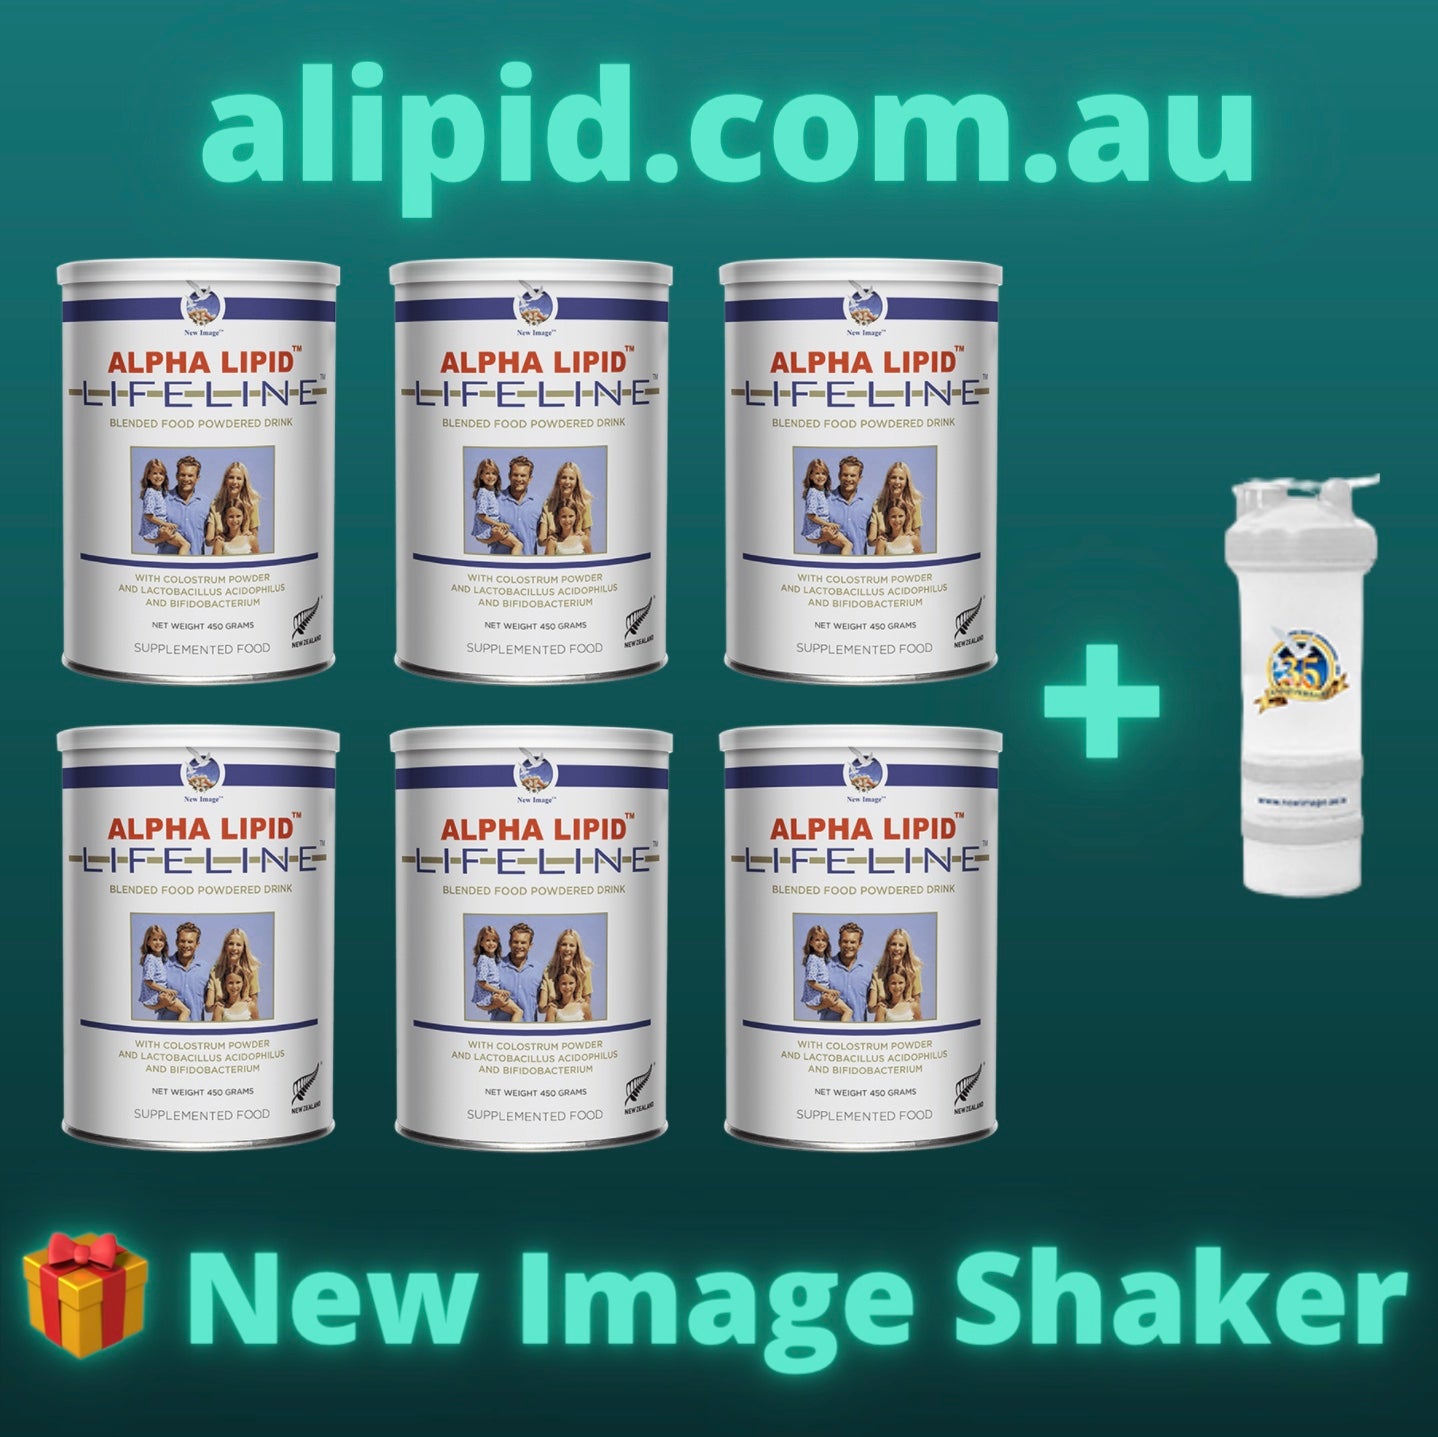 6 alpha lipid lifelines with New Image shaker